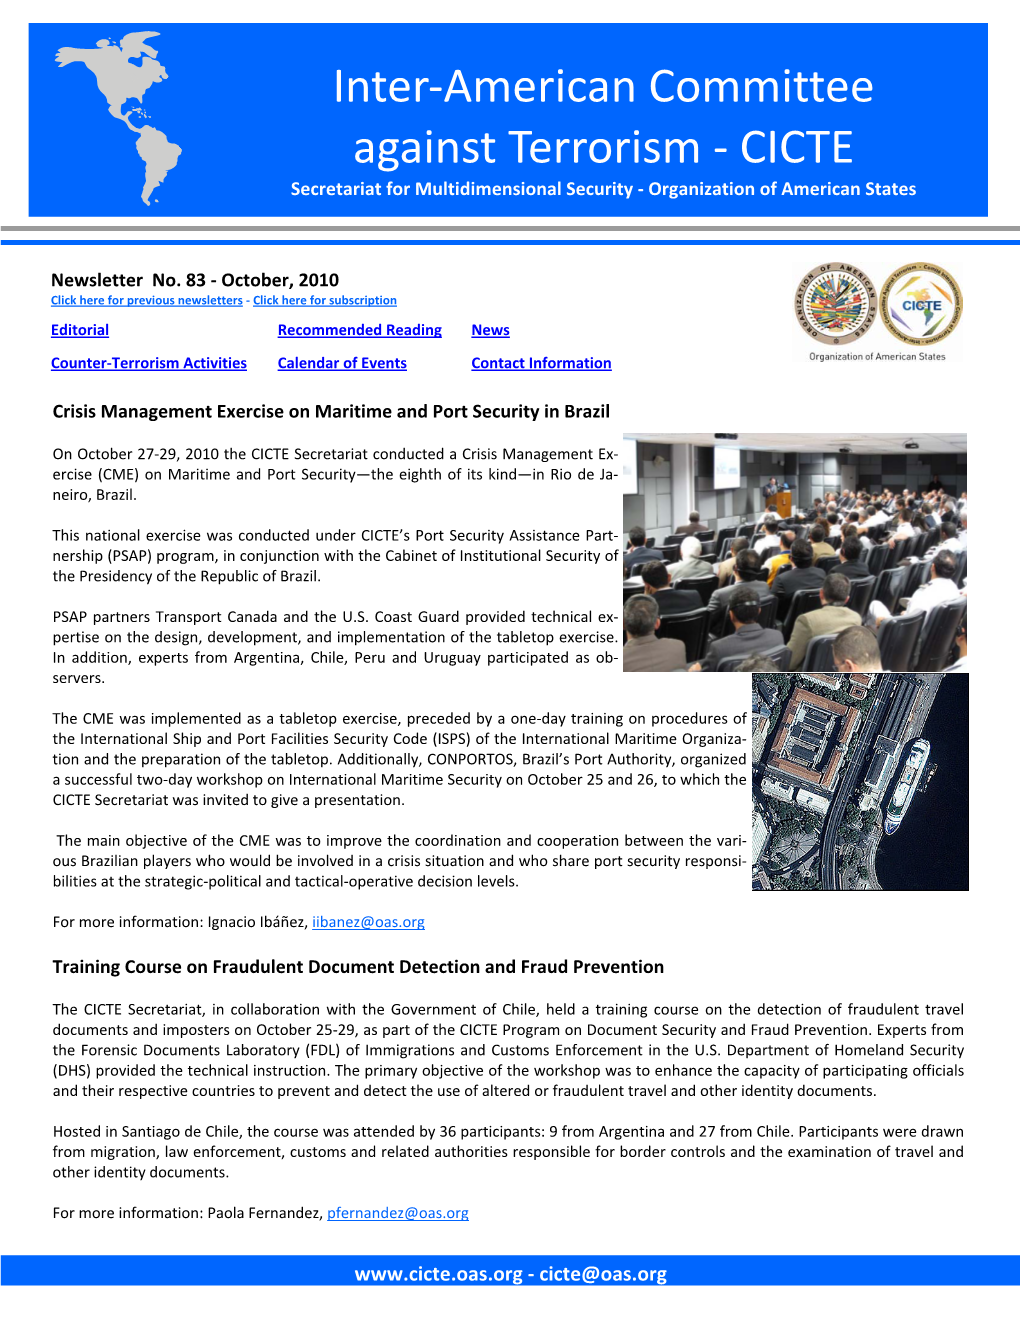 CICTE Secretariat for Multidimensional Security ‐ Organization of American States